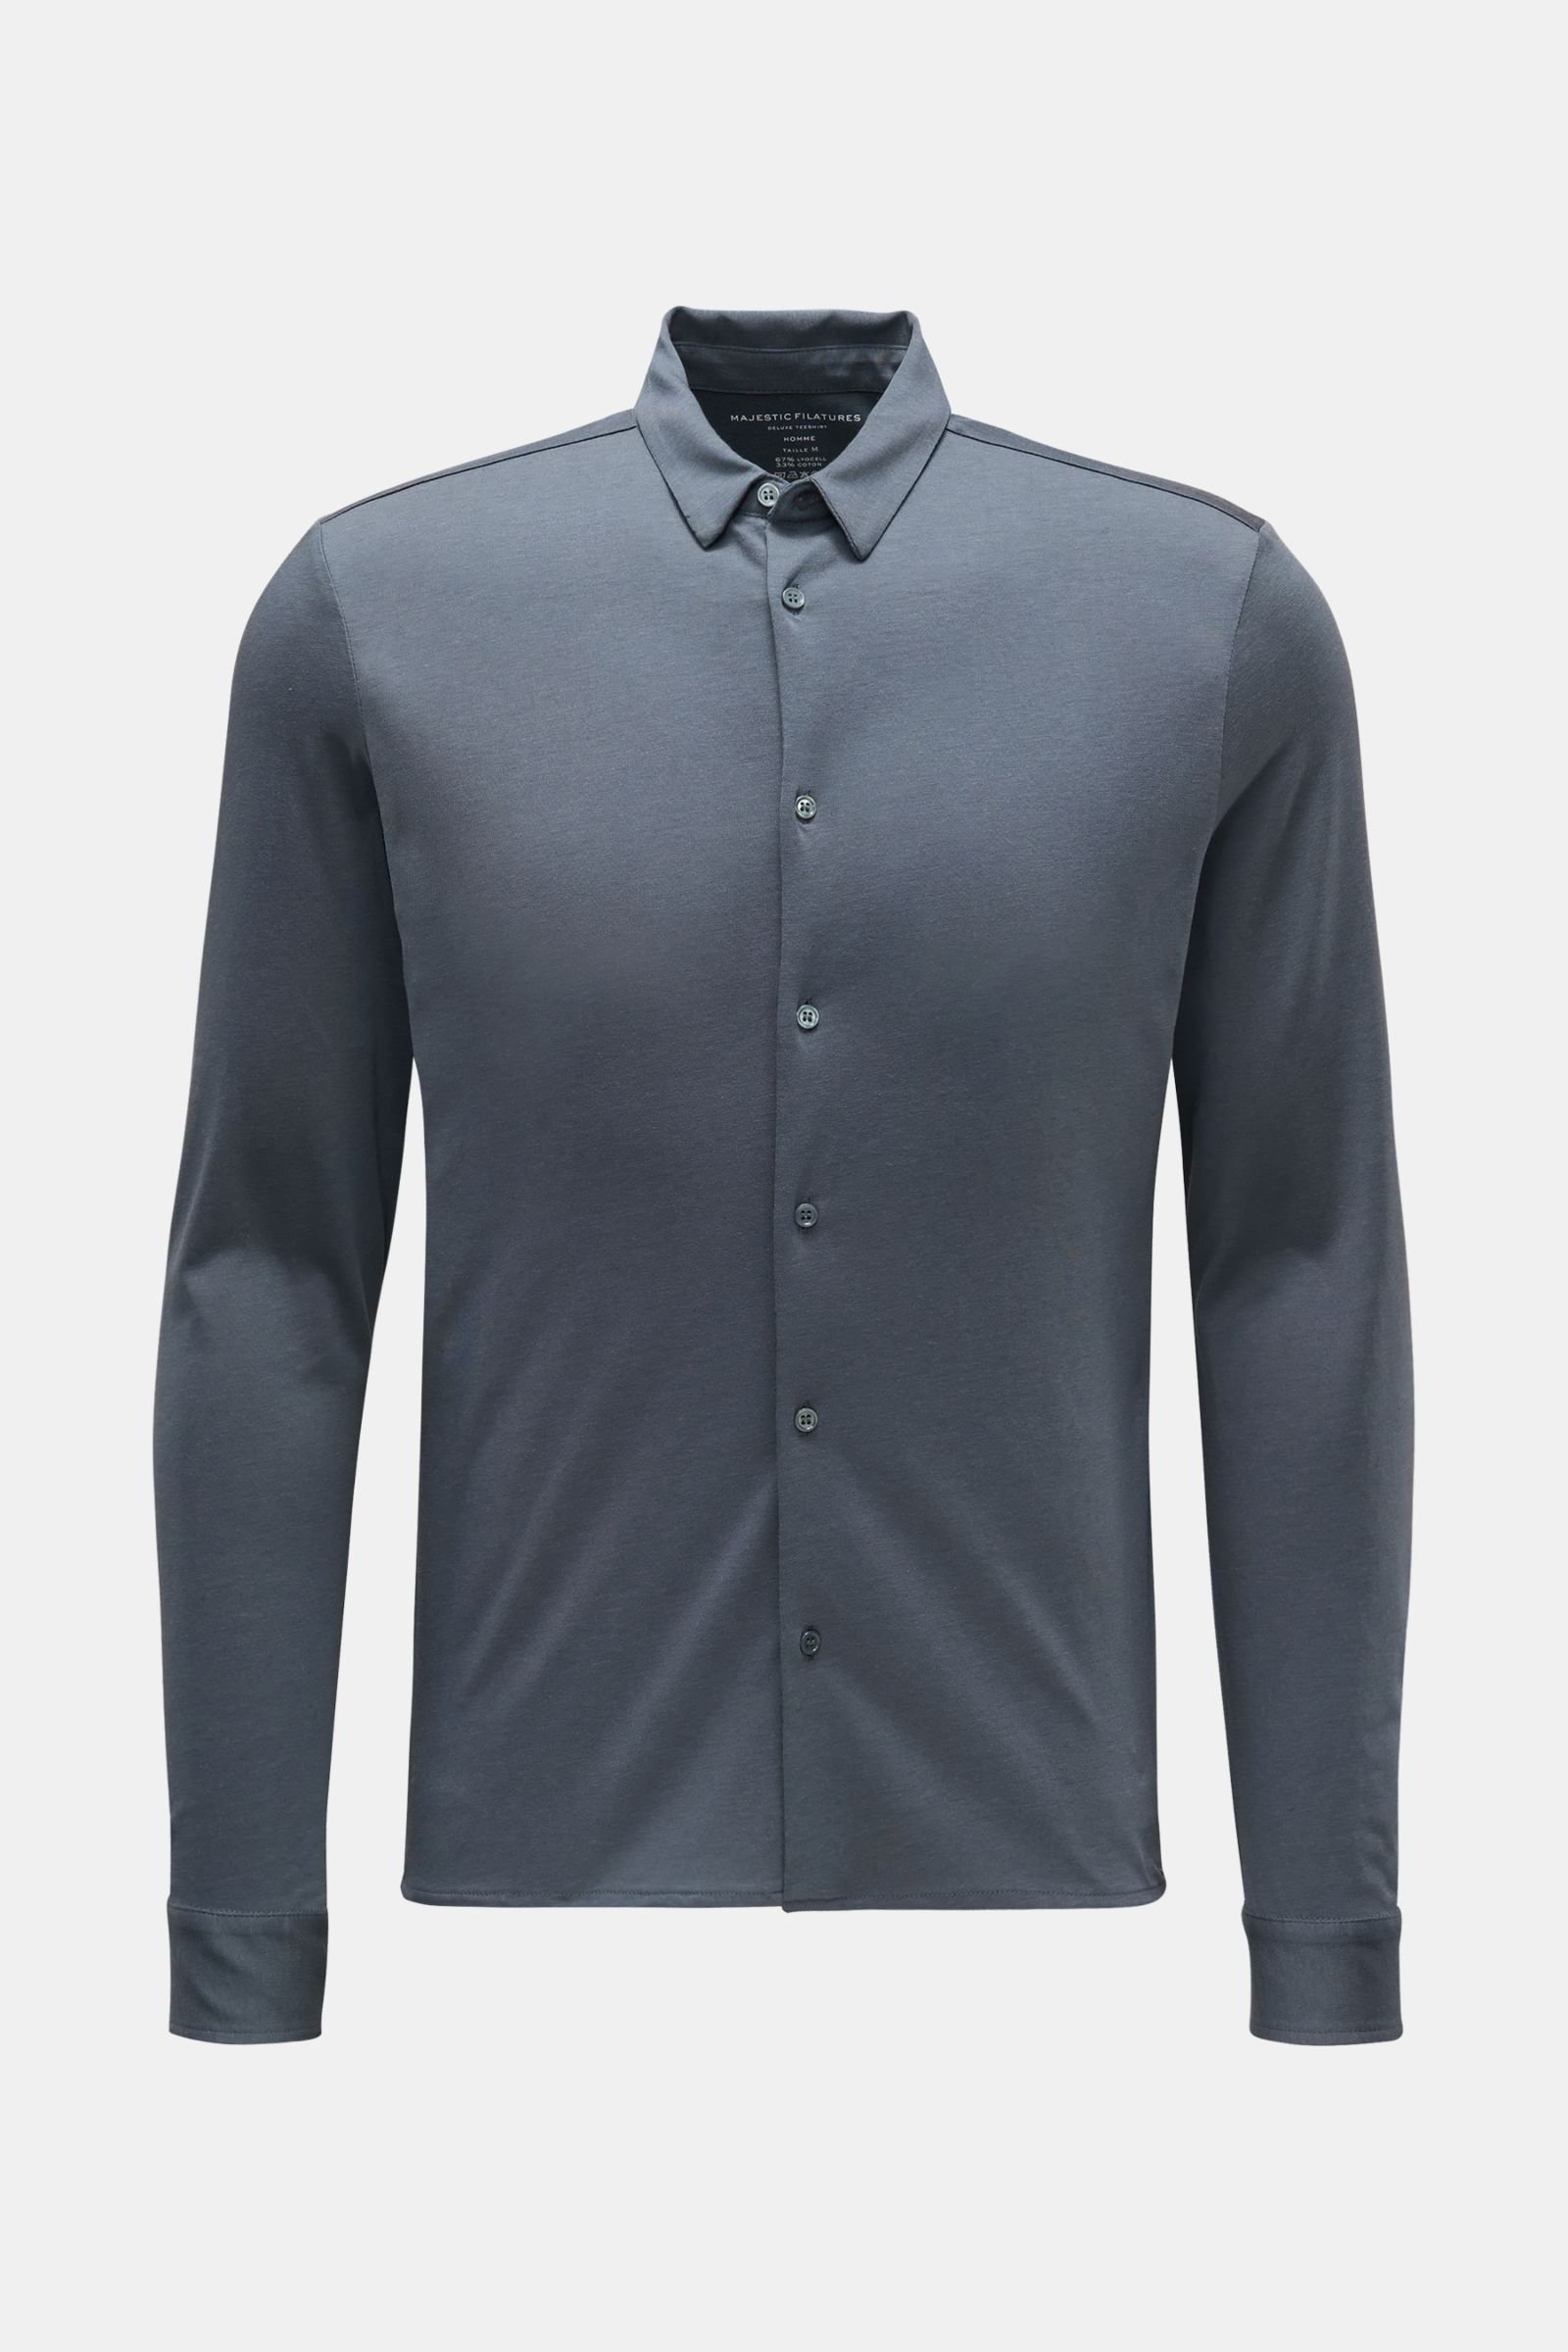 Jersey shirt slim collar dark grey